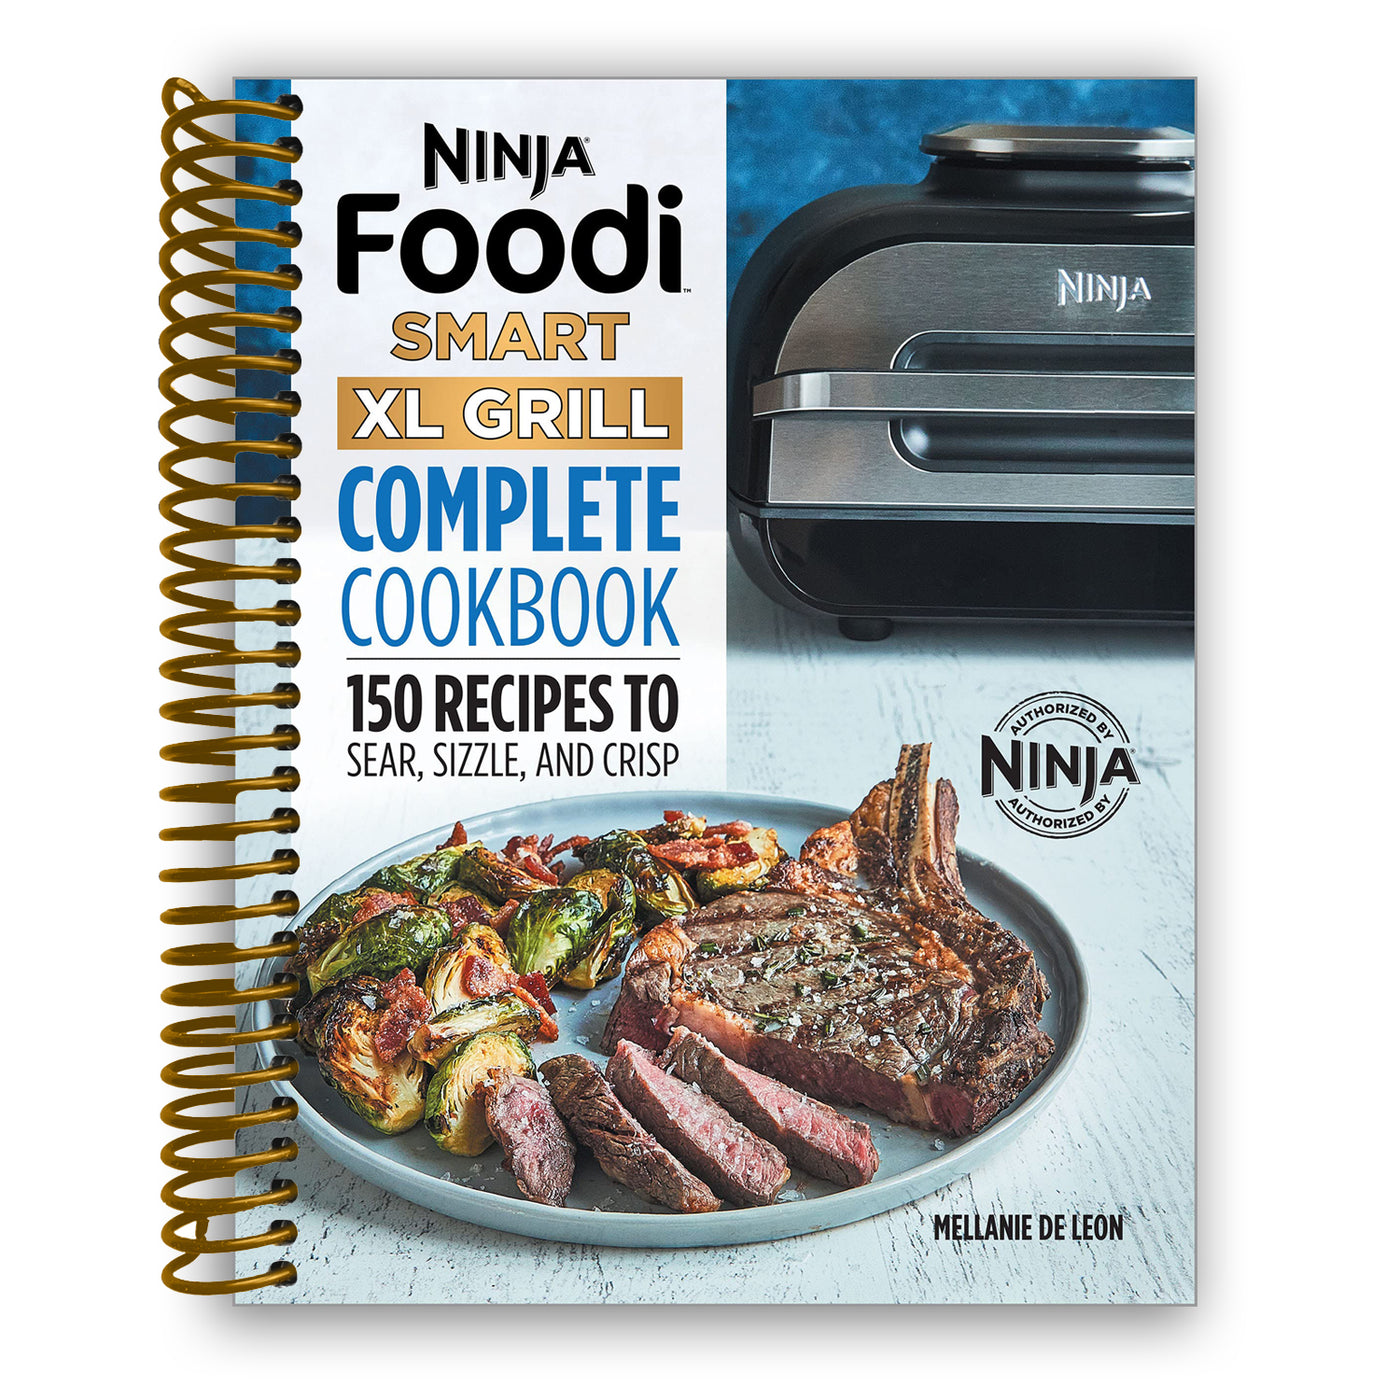 Ninja Foodi Grill Cookbook: 100 Quick-to-Make and Delicious